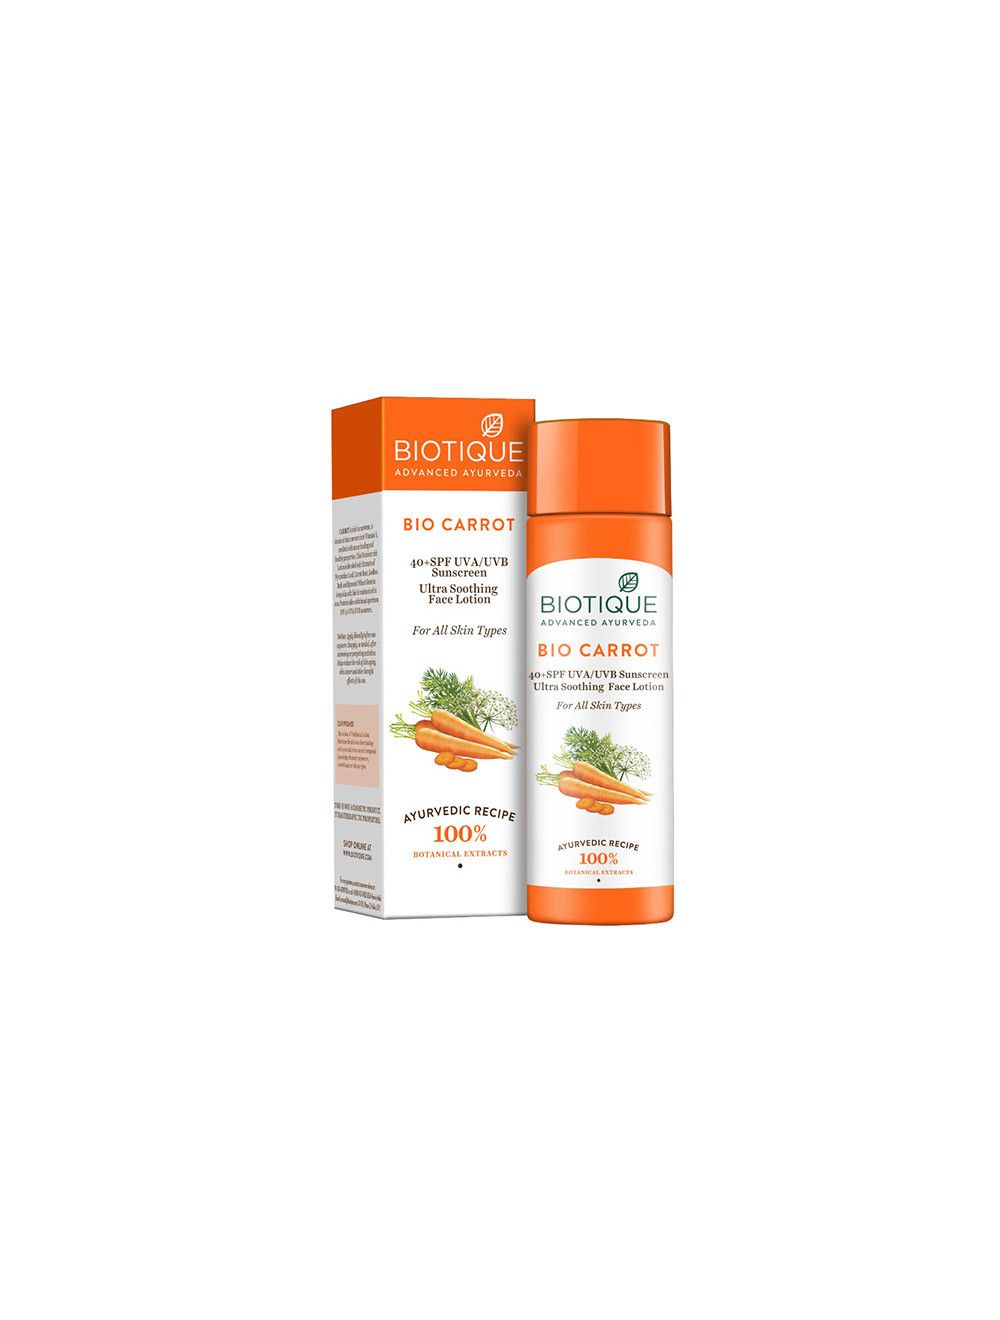 Biotique Bio Carrot Ultra Soothing Face Cream SPF 40+ Sunscreen - Niram